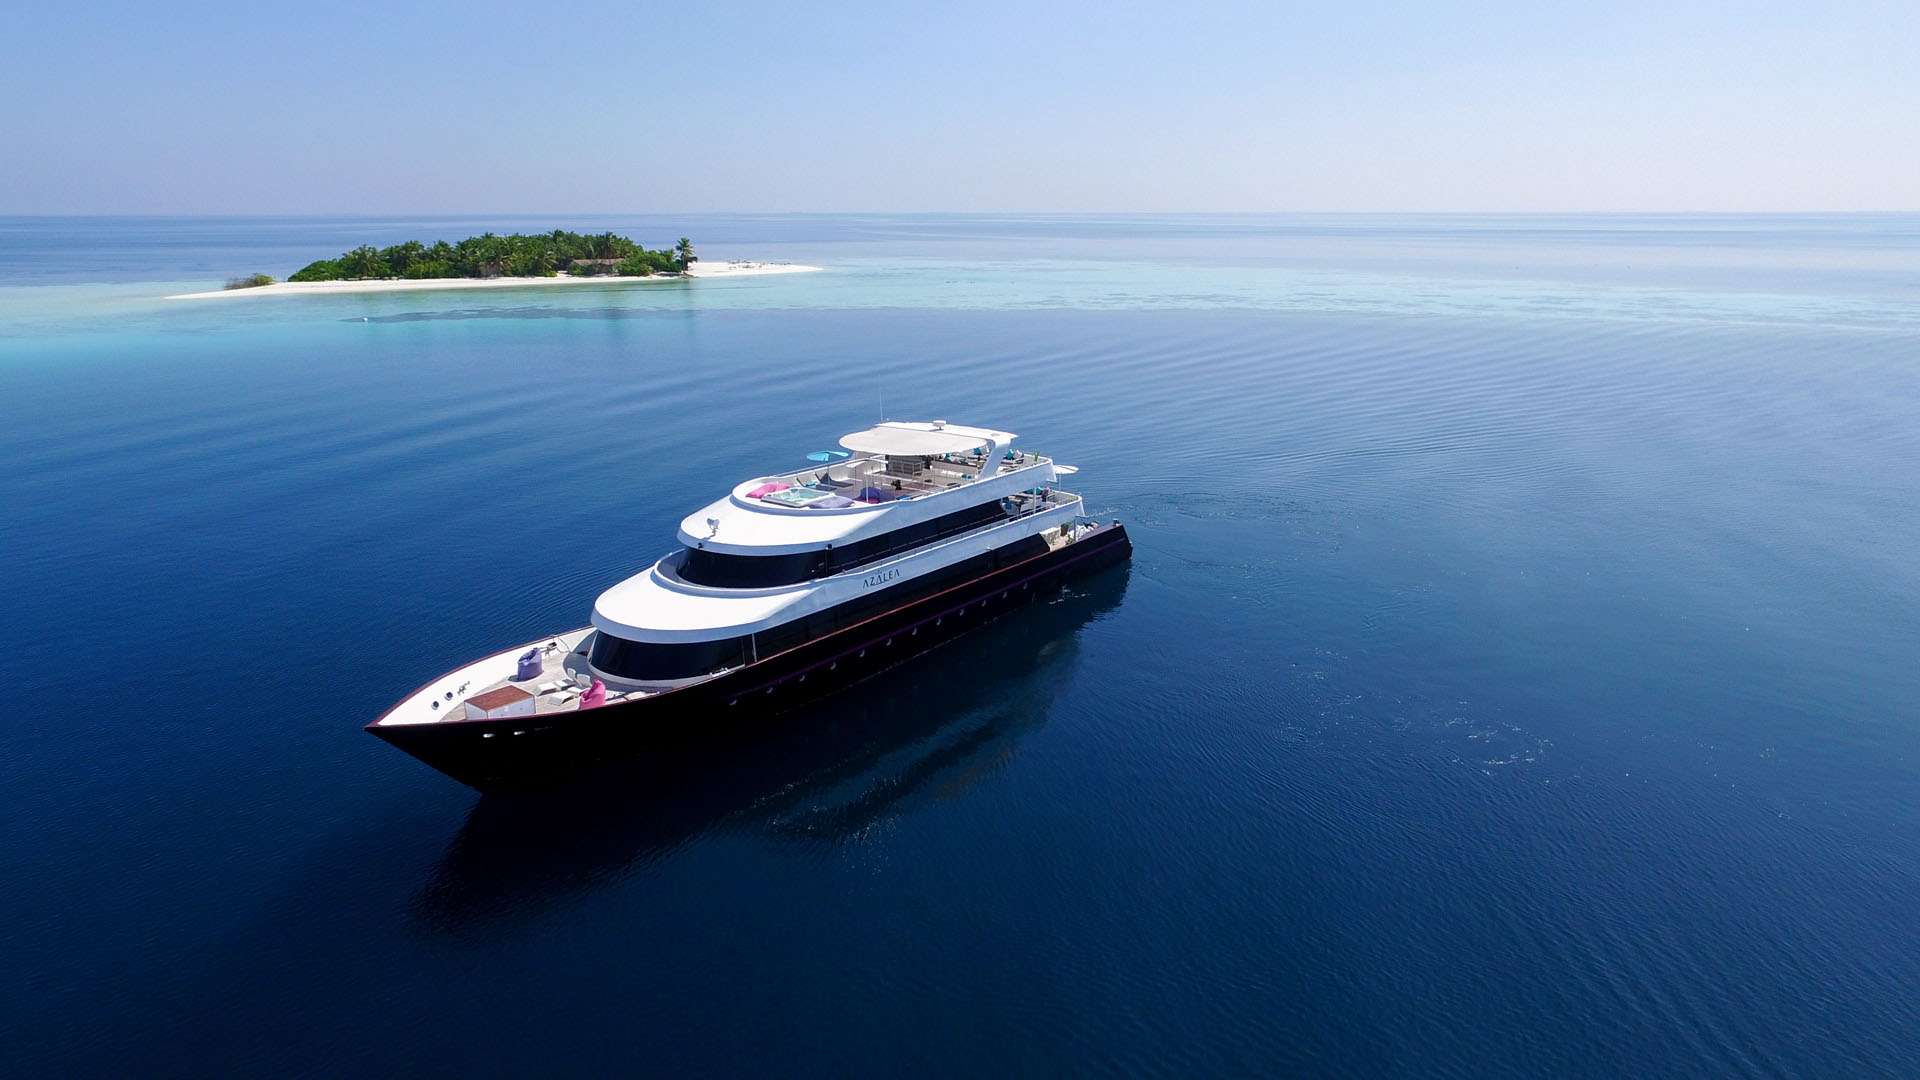 azalea - Yacht Charter Malaysia & Boat hire in Indian Ocean & SE Asia 6